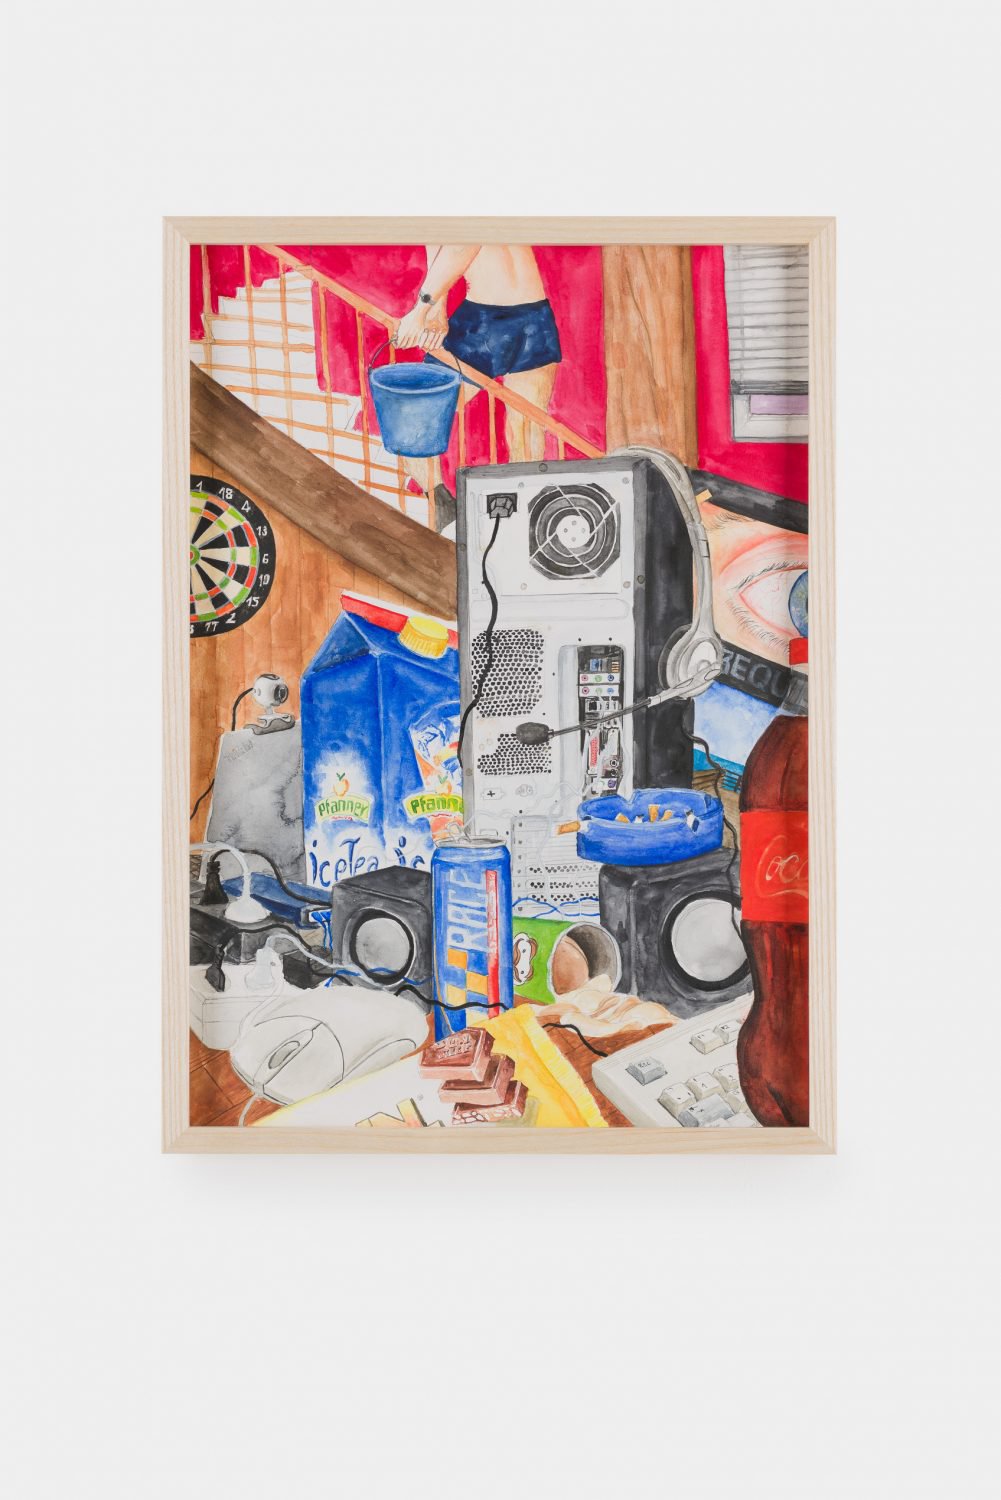 Matthias NogglerCS 1.6, 2018Watercolor and pencil on paper44.1 x 31.8 cm